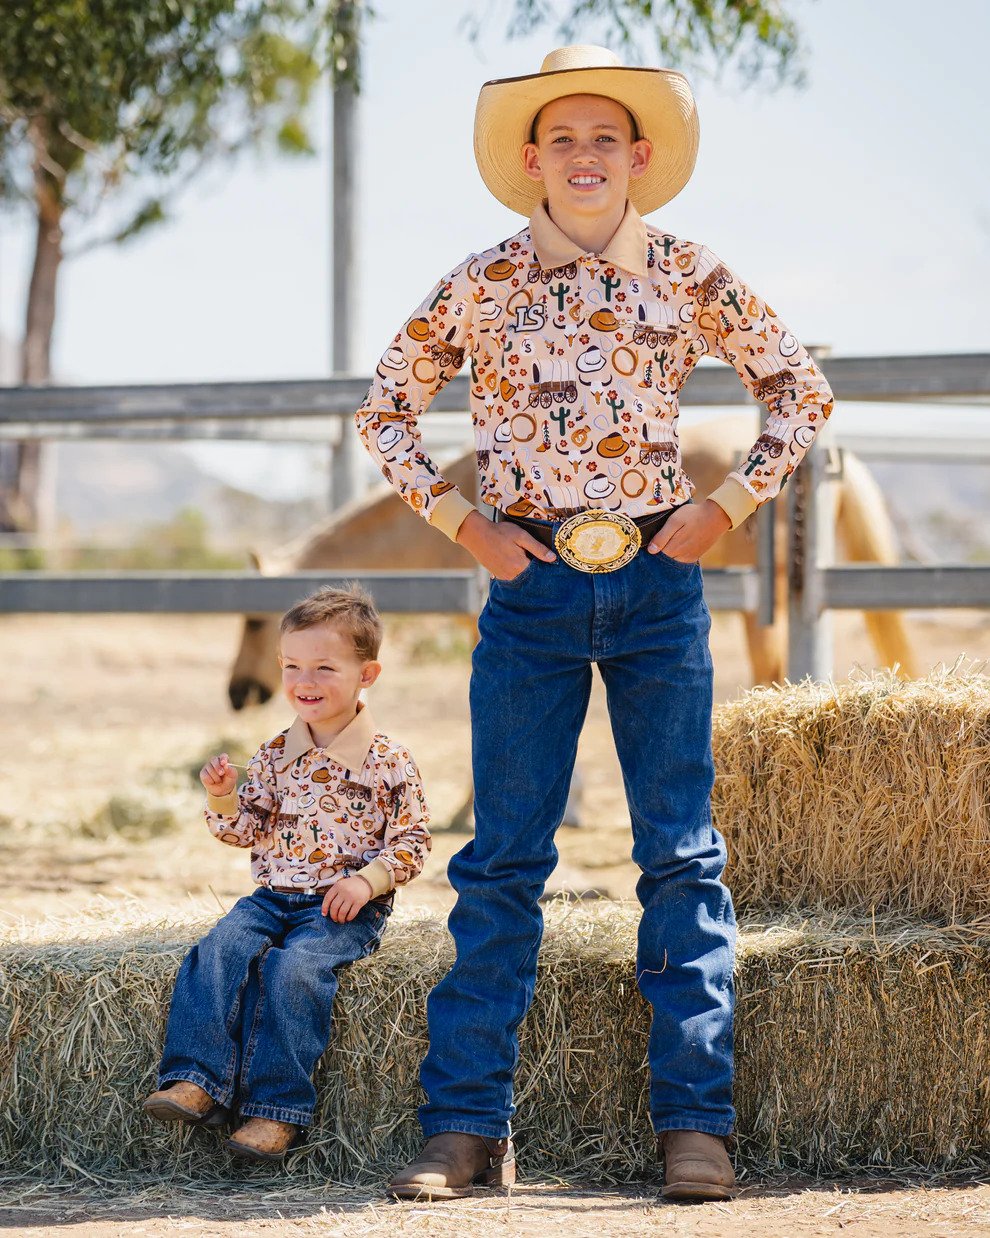 Little Spurs & Co Kids Fishing Shirt - Cowboy - Donohues, City